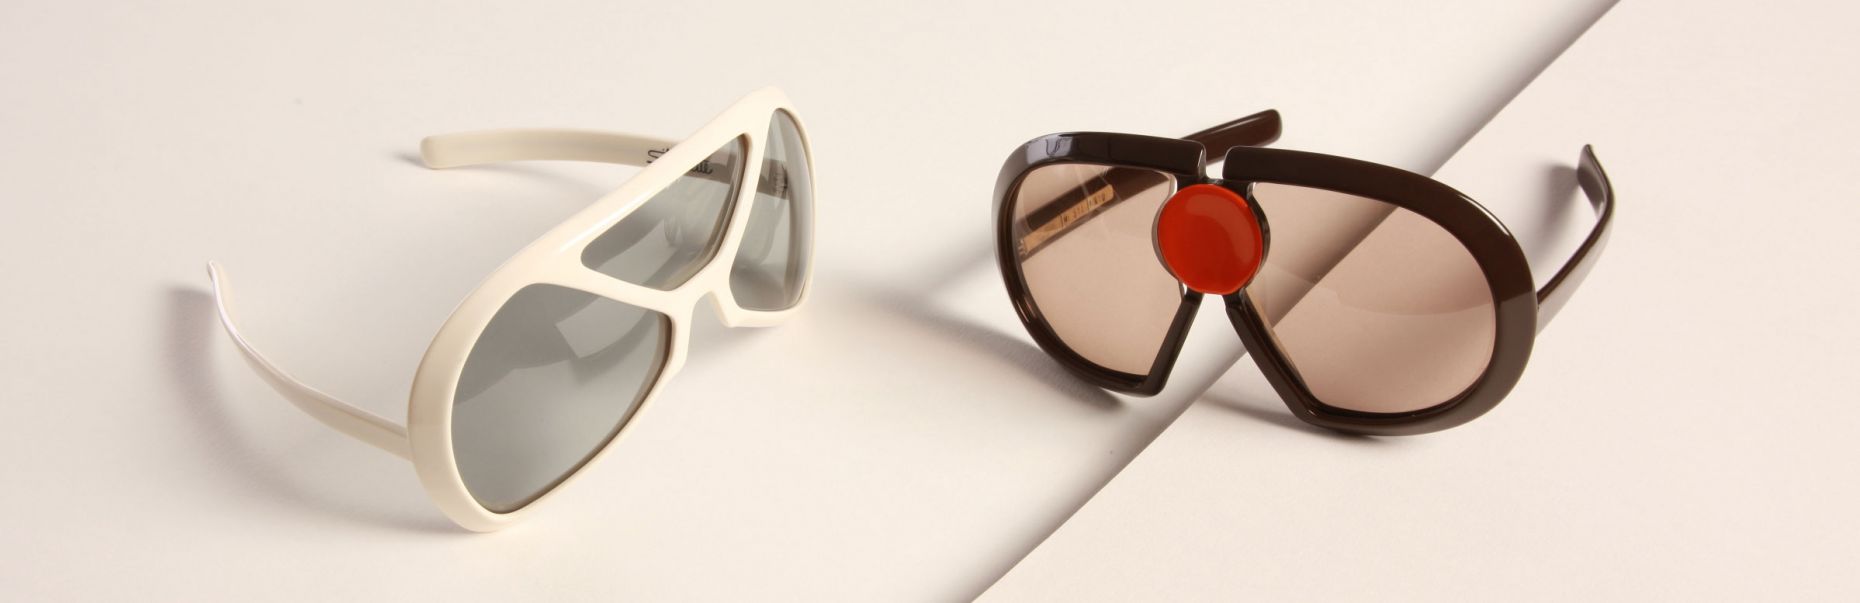 Outstanding designer glasses from the 70s: Futura Silhouette 570 und 571